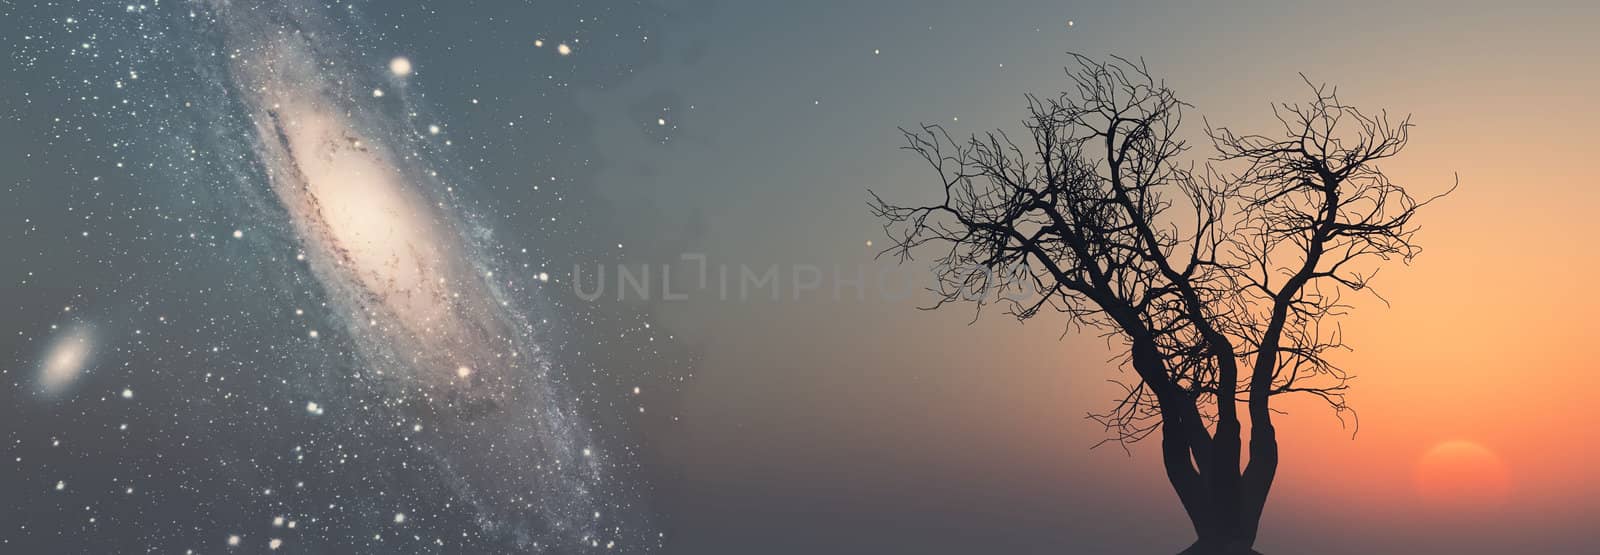 dead tree against a background of Milky Way by njaj